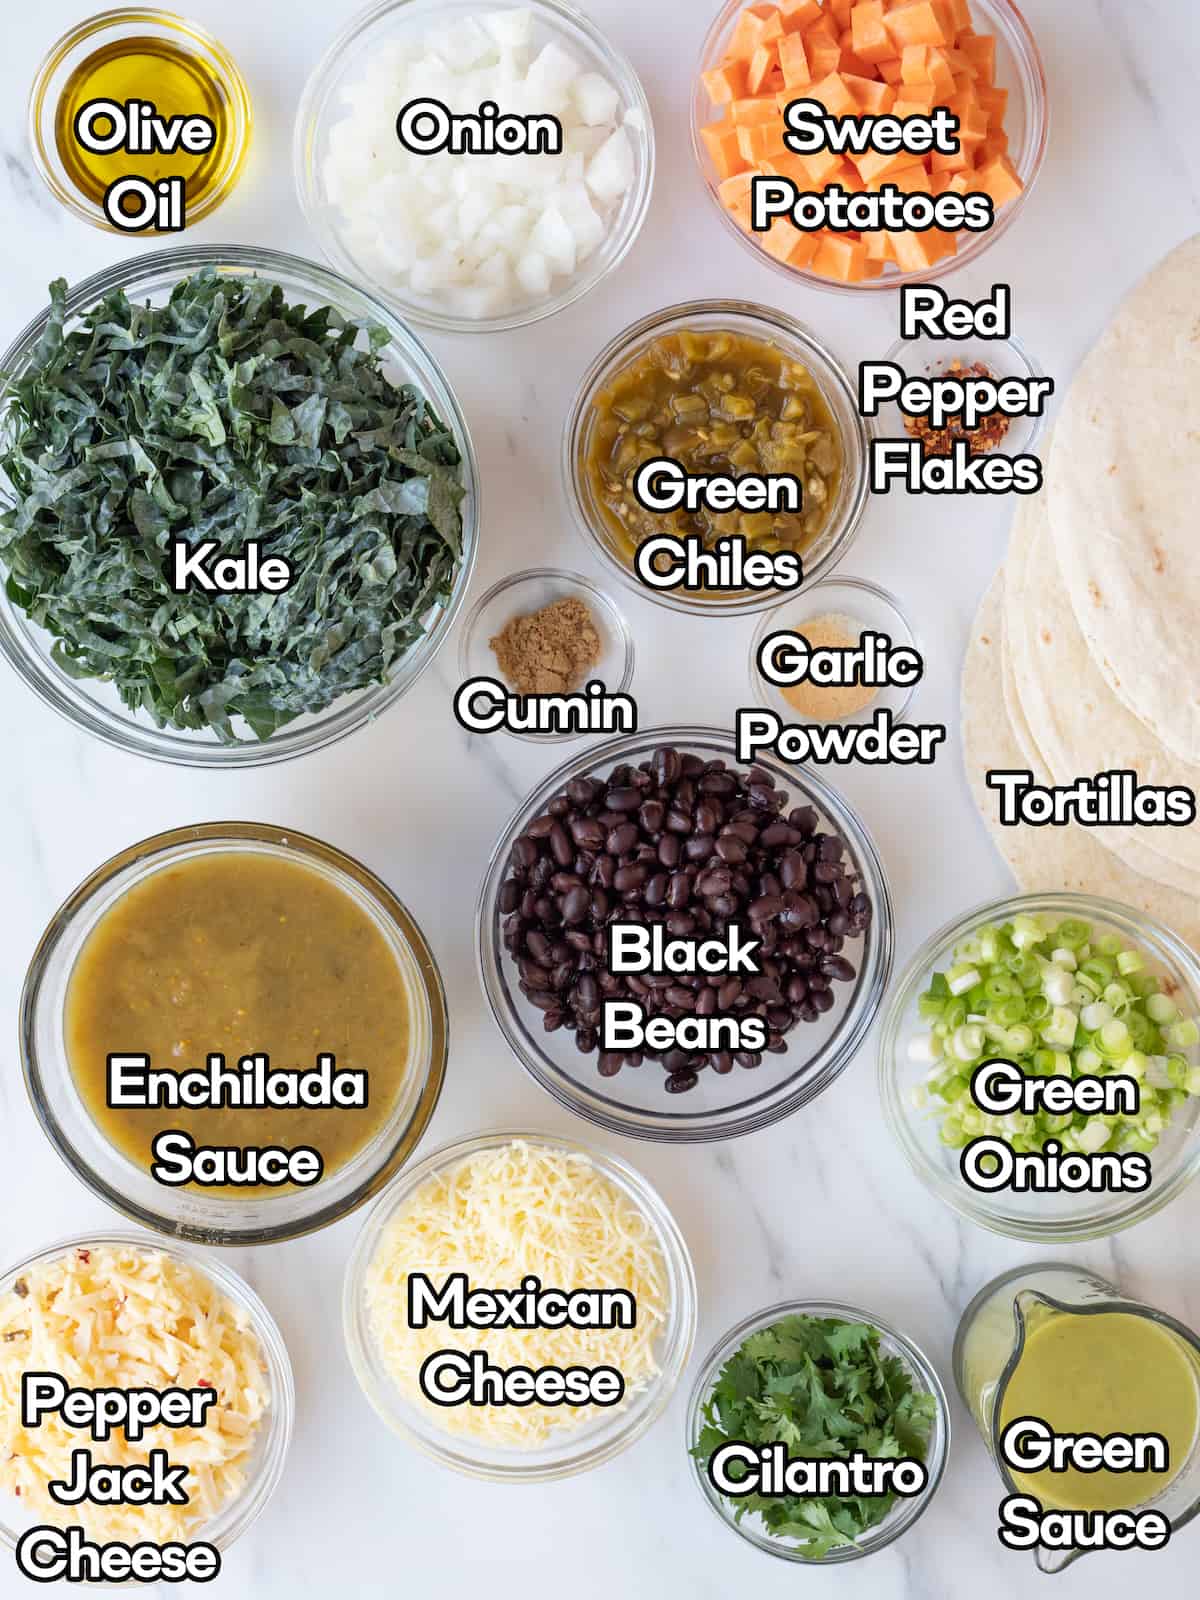 Mise-en-place of all the ingredients to make vegetarian enchiladas.